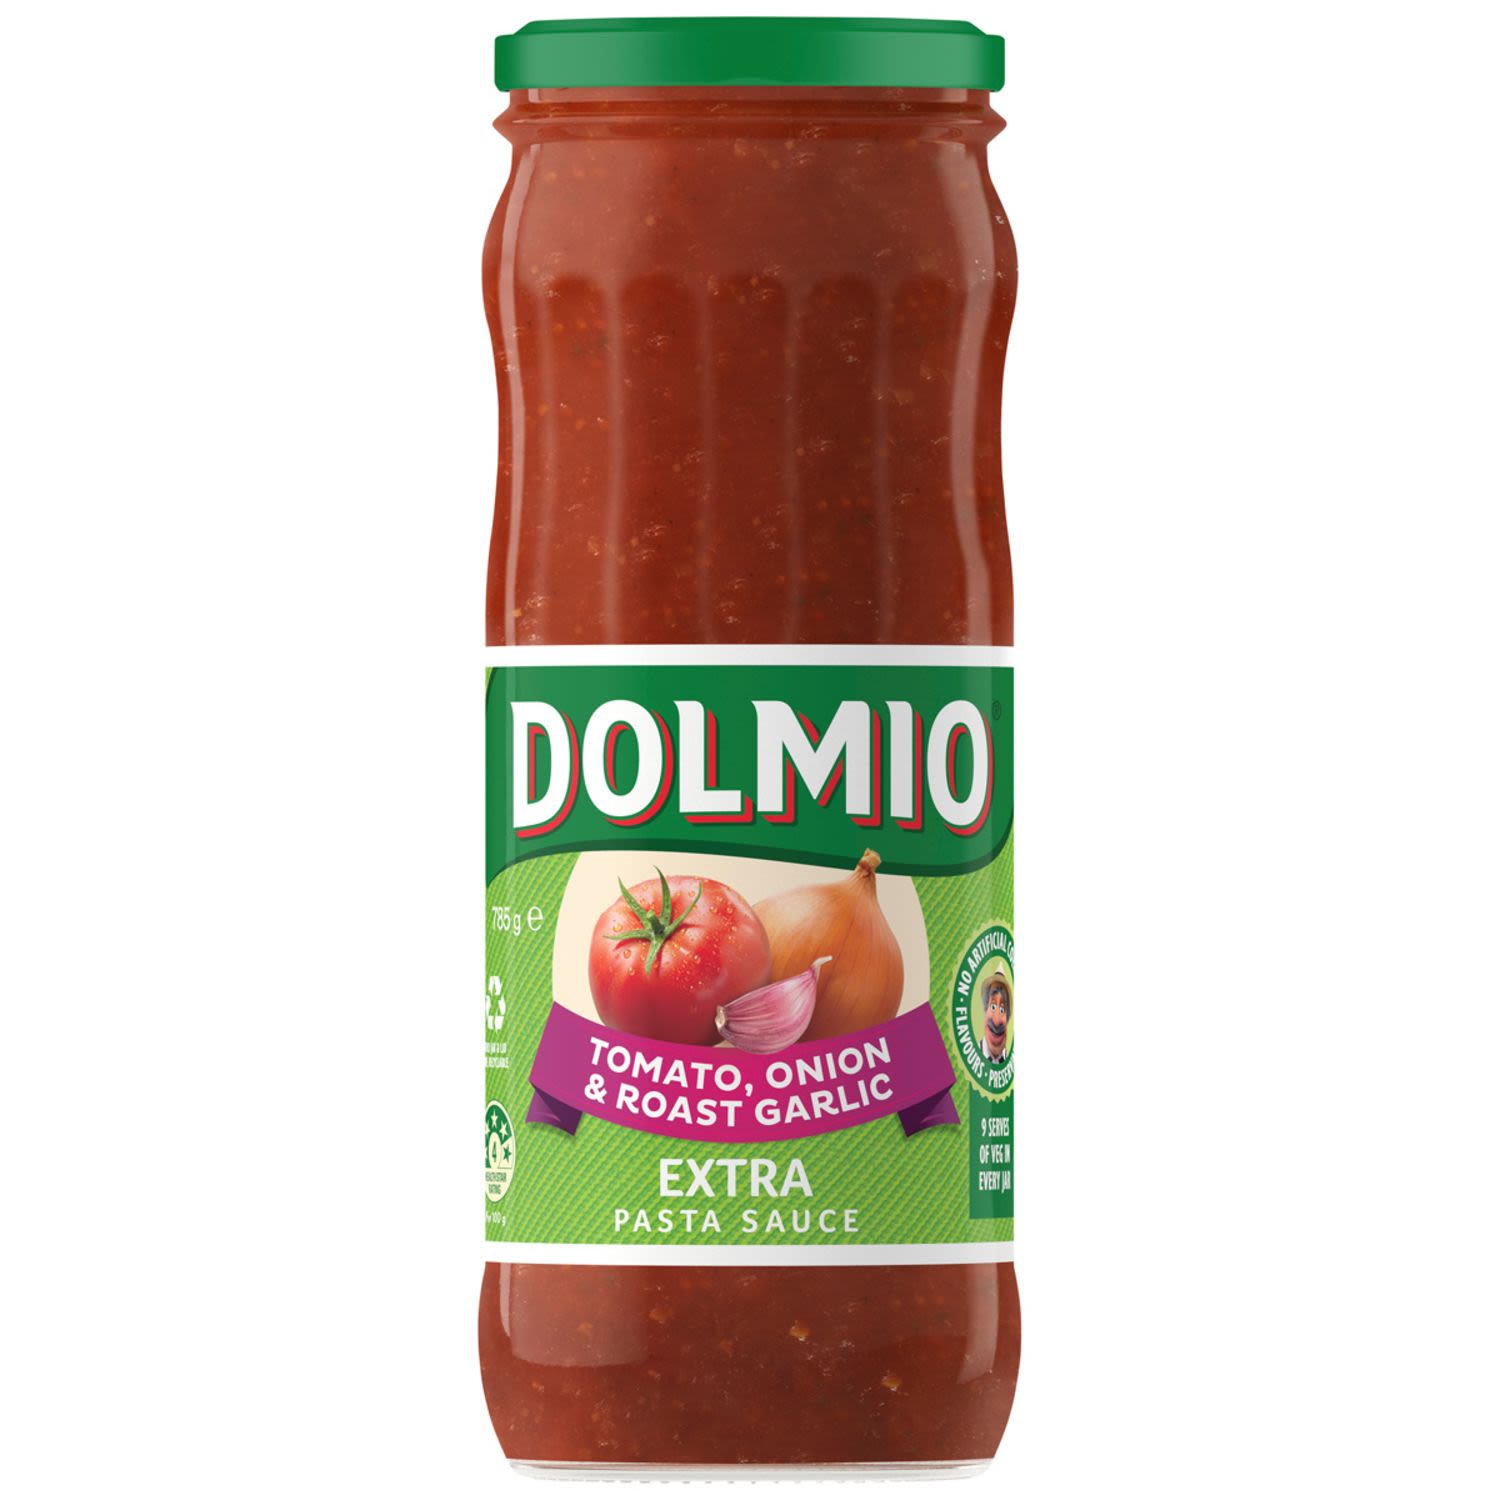 Dolmio Extra Tomato, Onion & Roast Garlic Pasta Sauce, 785 Gram